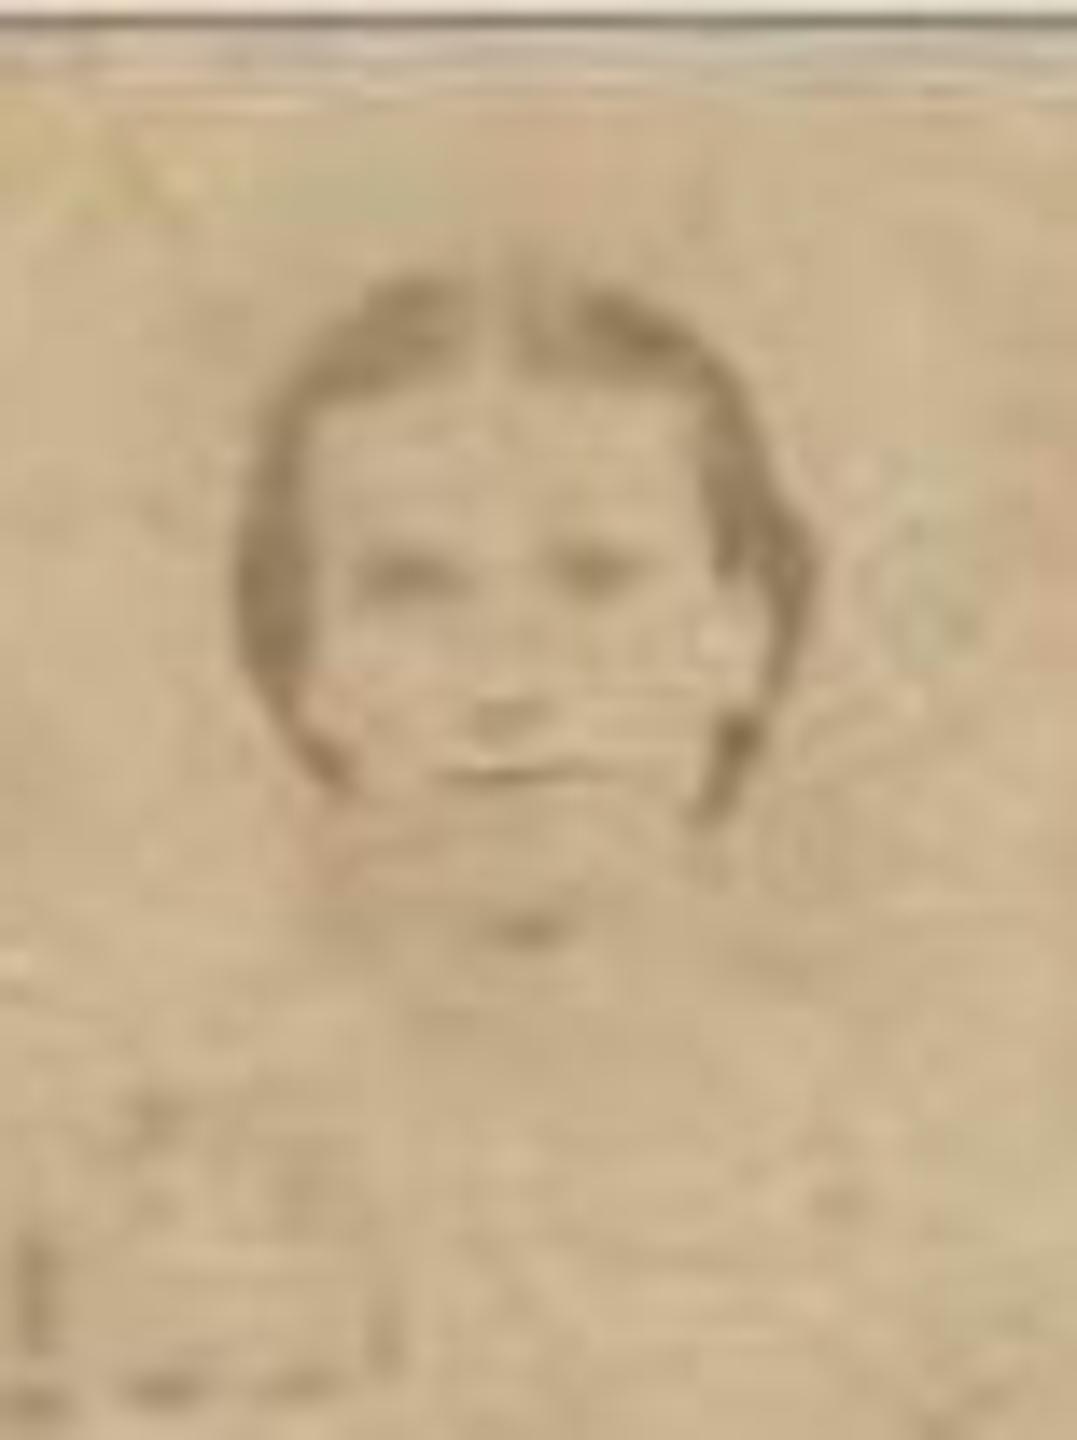 America Ann Neel (1839 - 1875) Profile